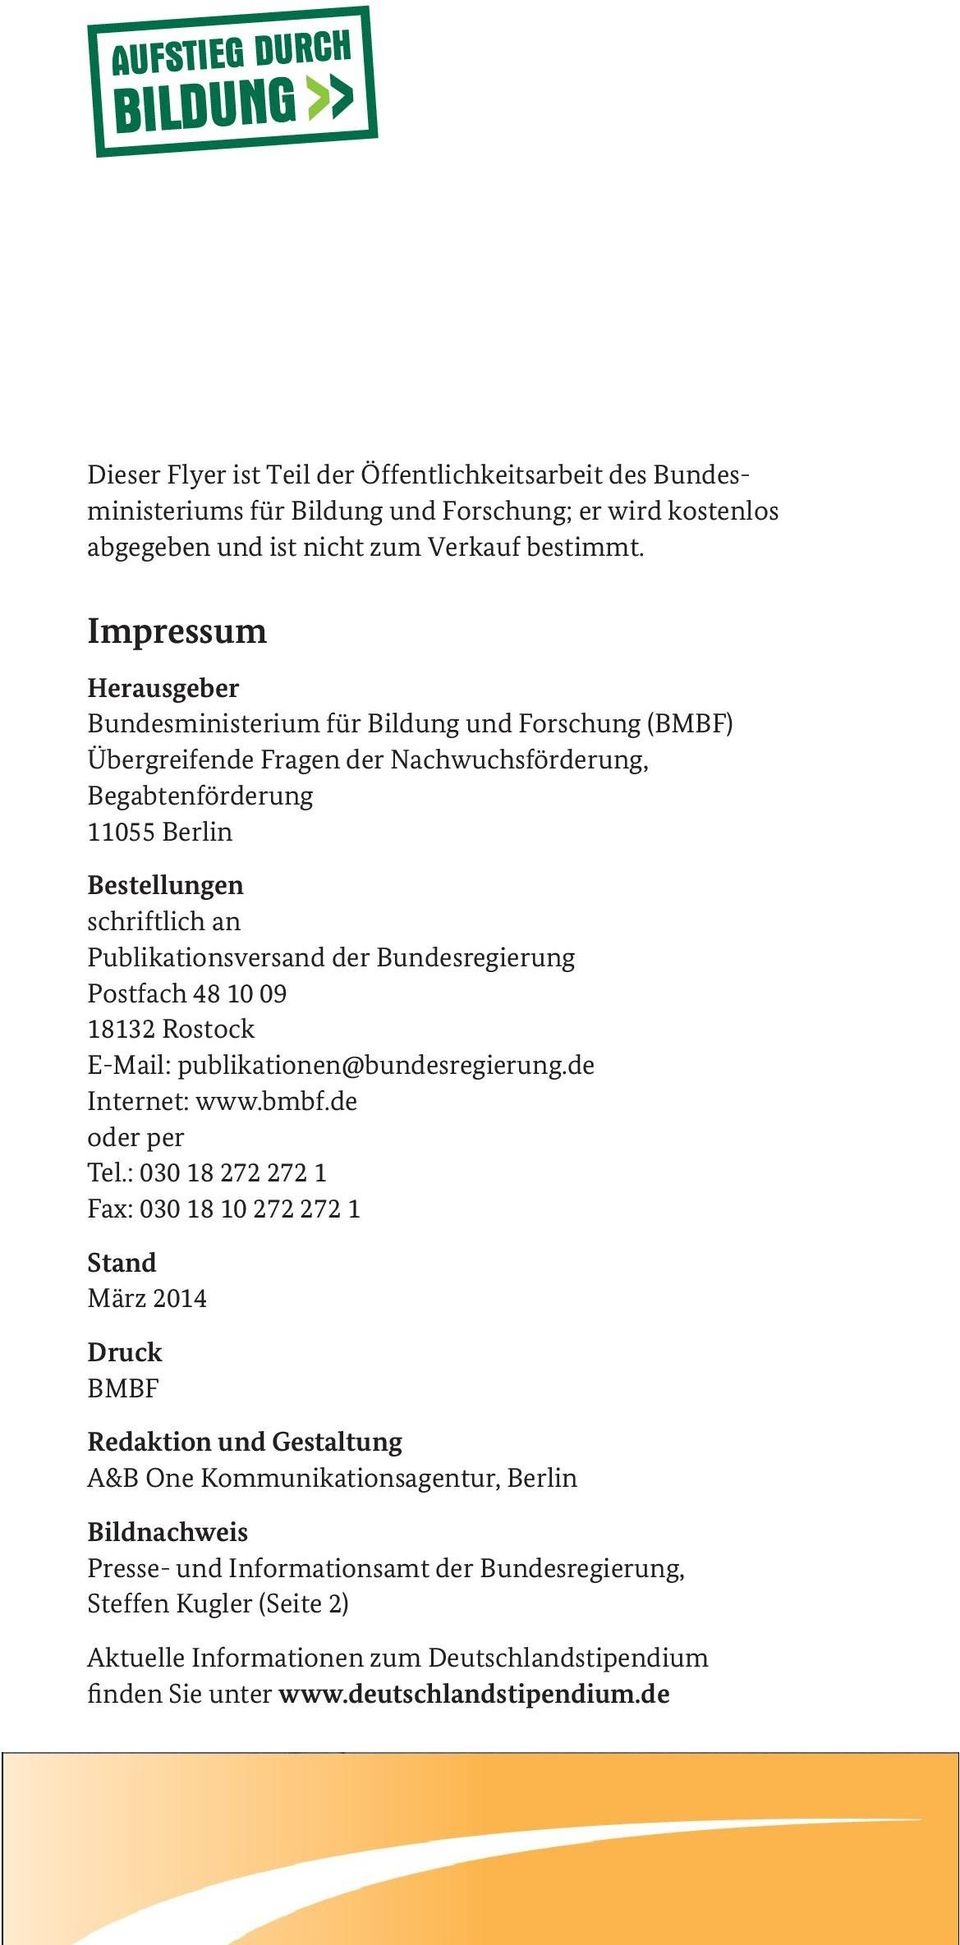 der Bundesregierung Postfach 48 10 09 18132 Rostock E Mail: publikationen@bundesregierung.de Internet: www.bmbf.de oder per Tel.